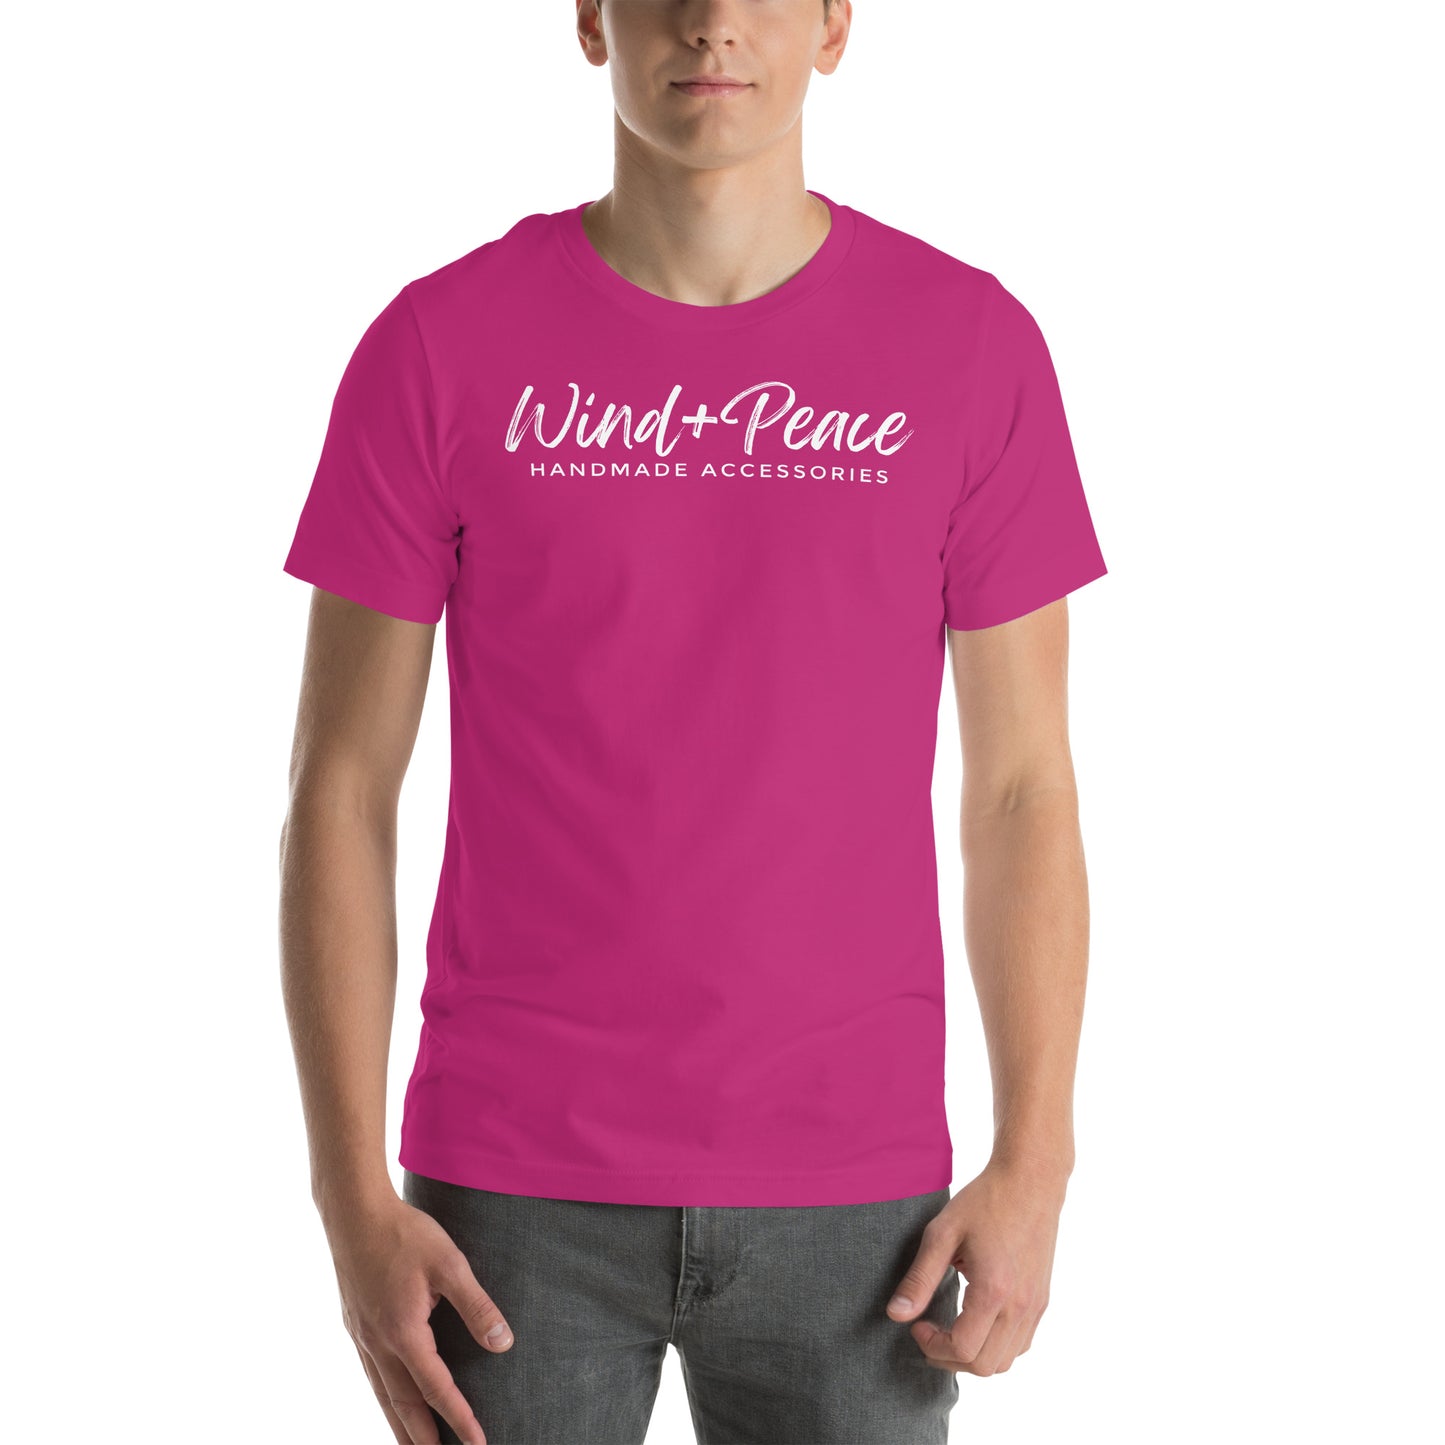 W+P Large Front Graphic Unisex t-shirt - Solid Colors